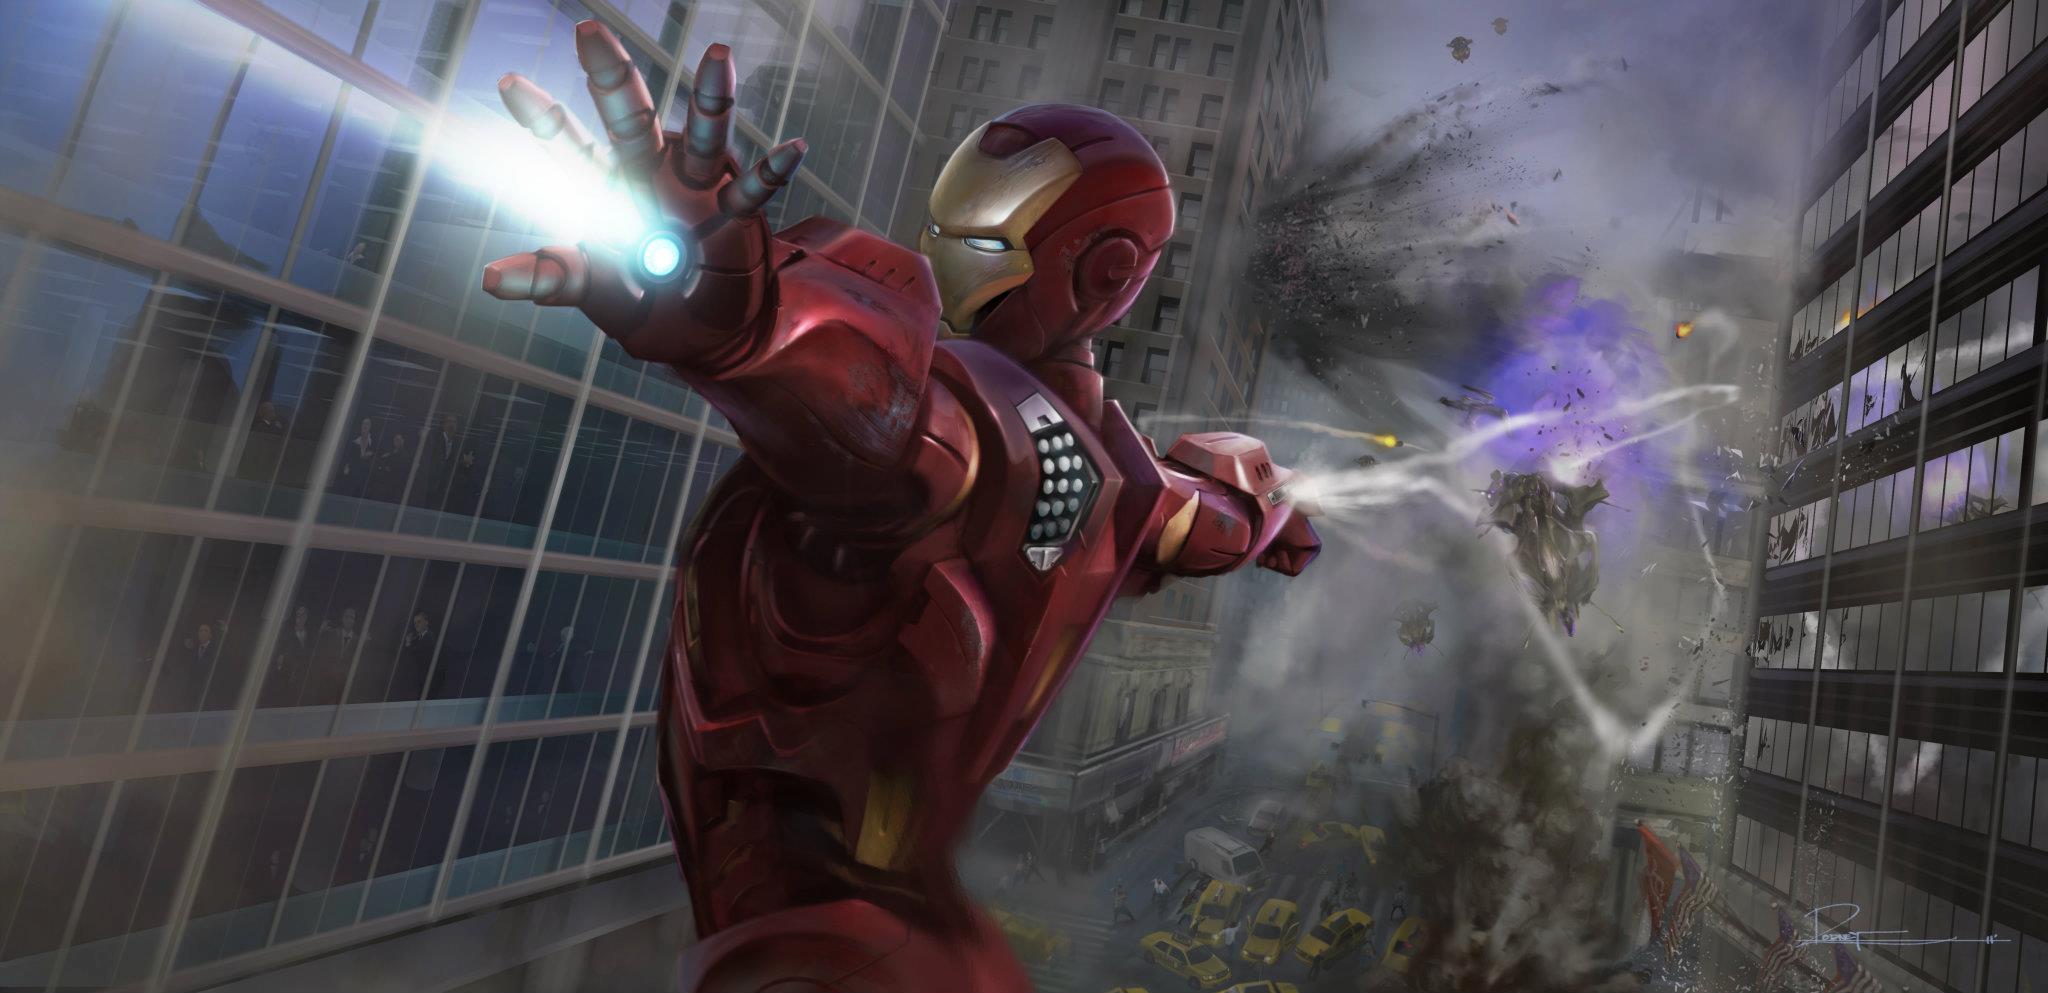 Download Avengers Infinity War Superheroes Fan Art Wallpaper  Wallpapers com